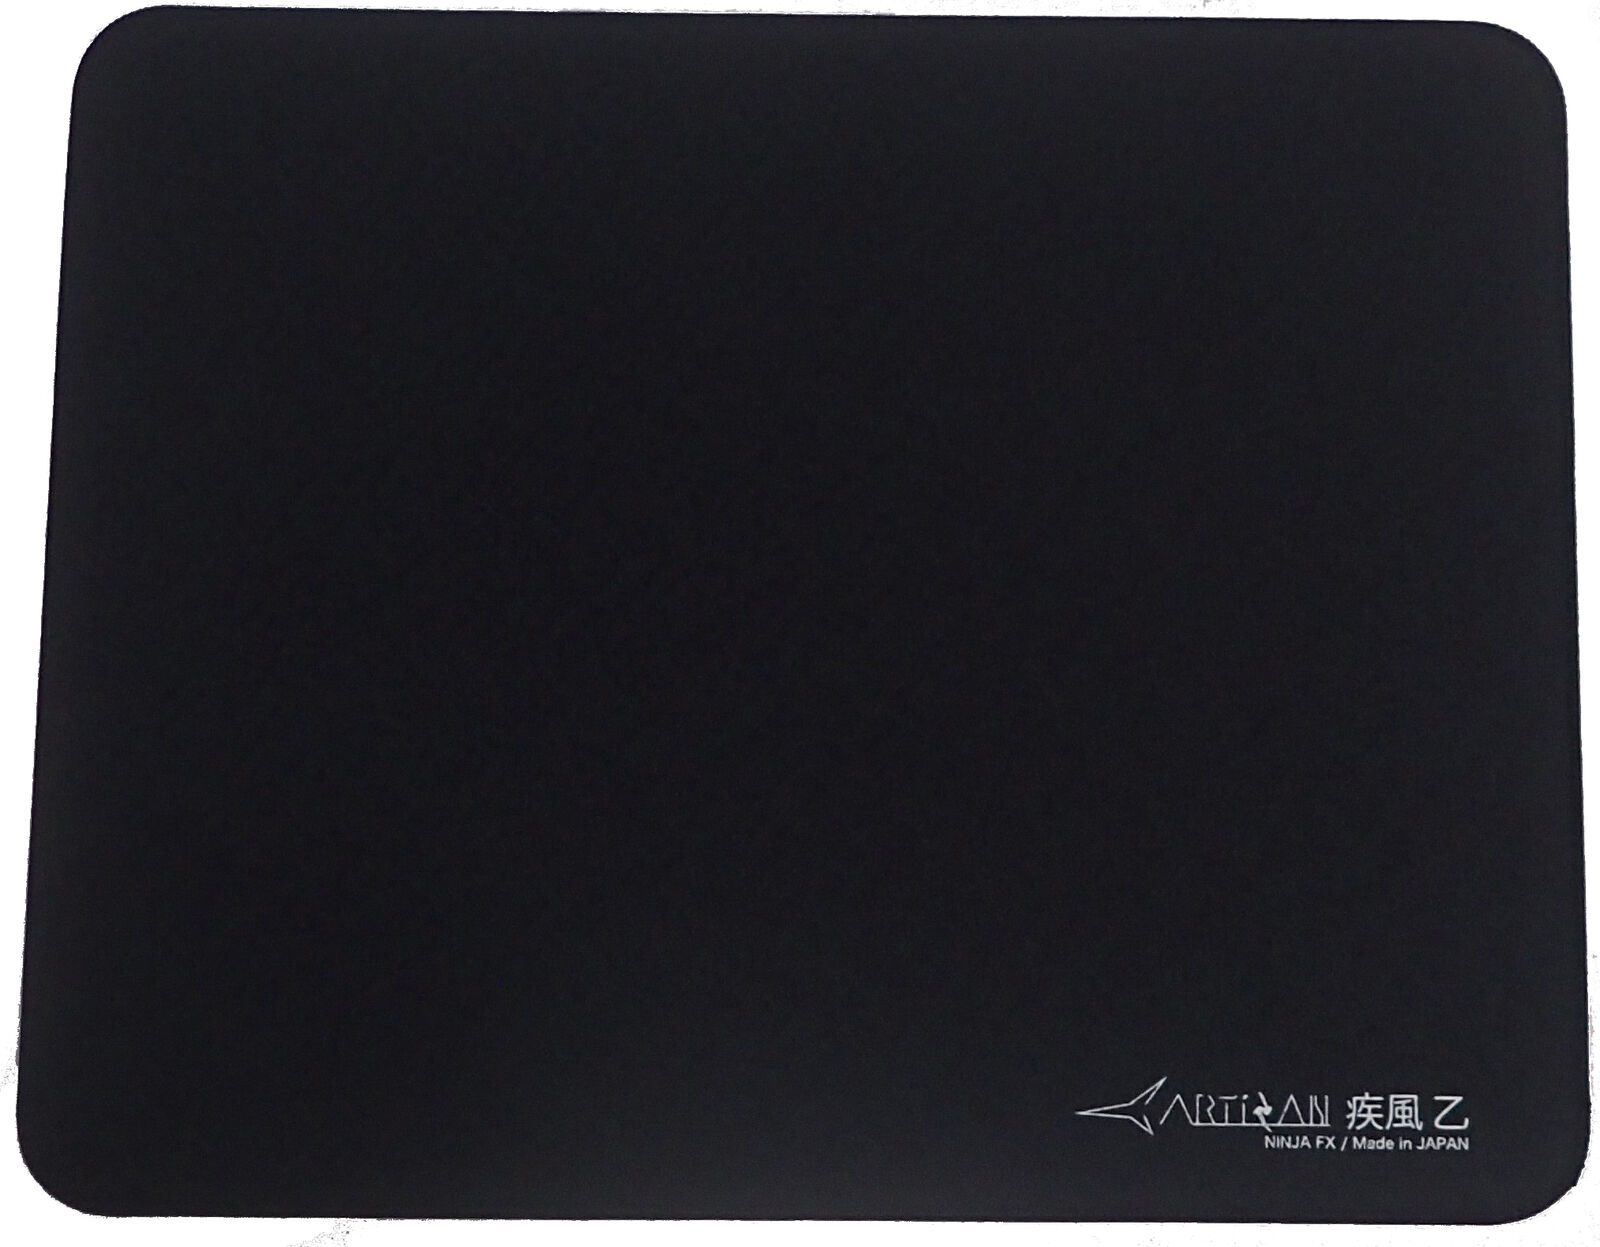 ARTISAN Ninja FX Hayate Otsu Gaming Mouse Pad Mid Soft Xsoft M L XL Black Red